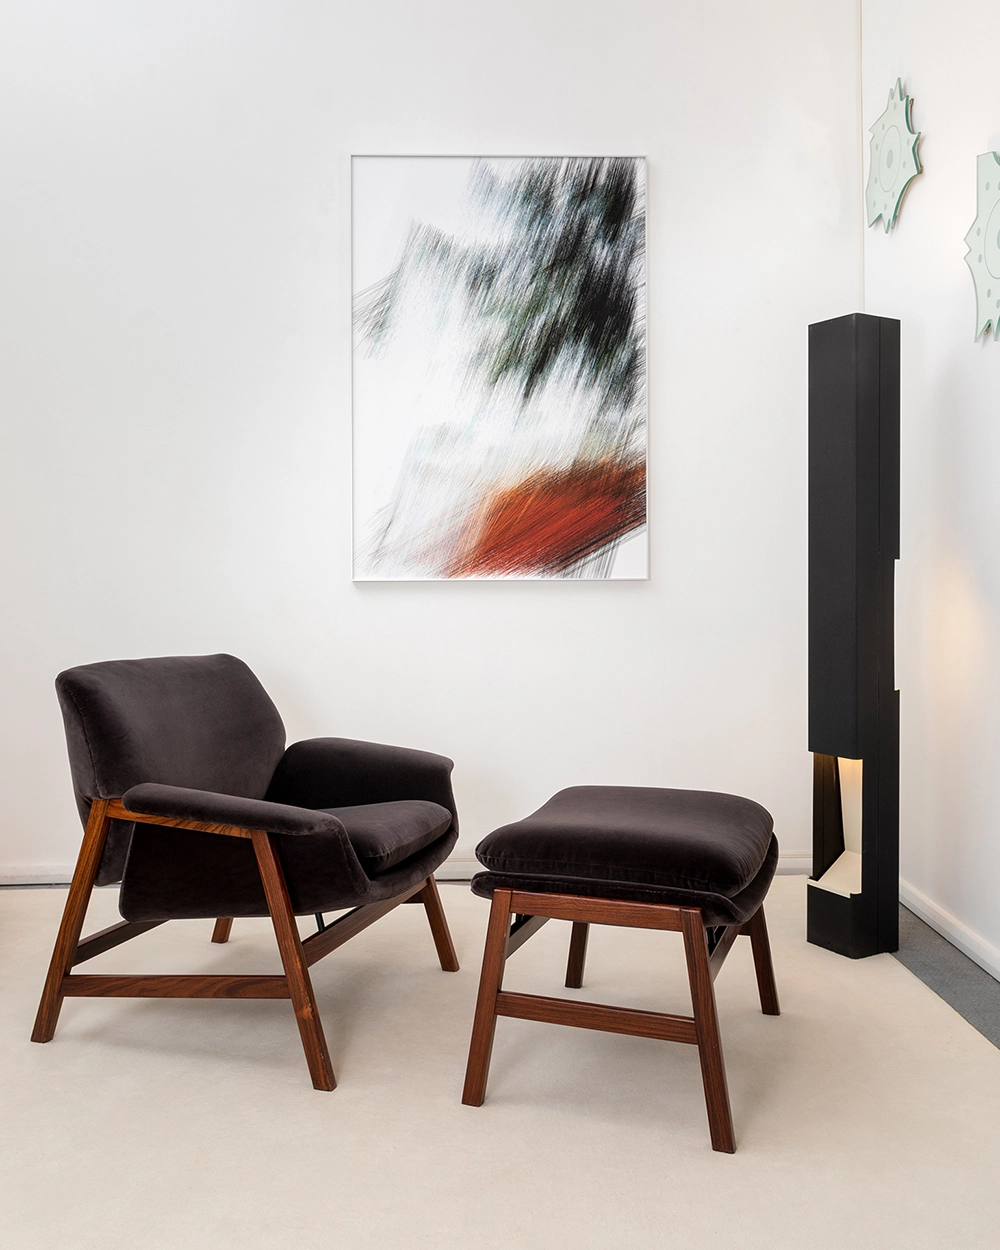 2 armchairs model n°849 and 1 ottoman n°849/S (brown) - Gianfranco Frattini - Seating - Galerie kreo